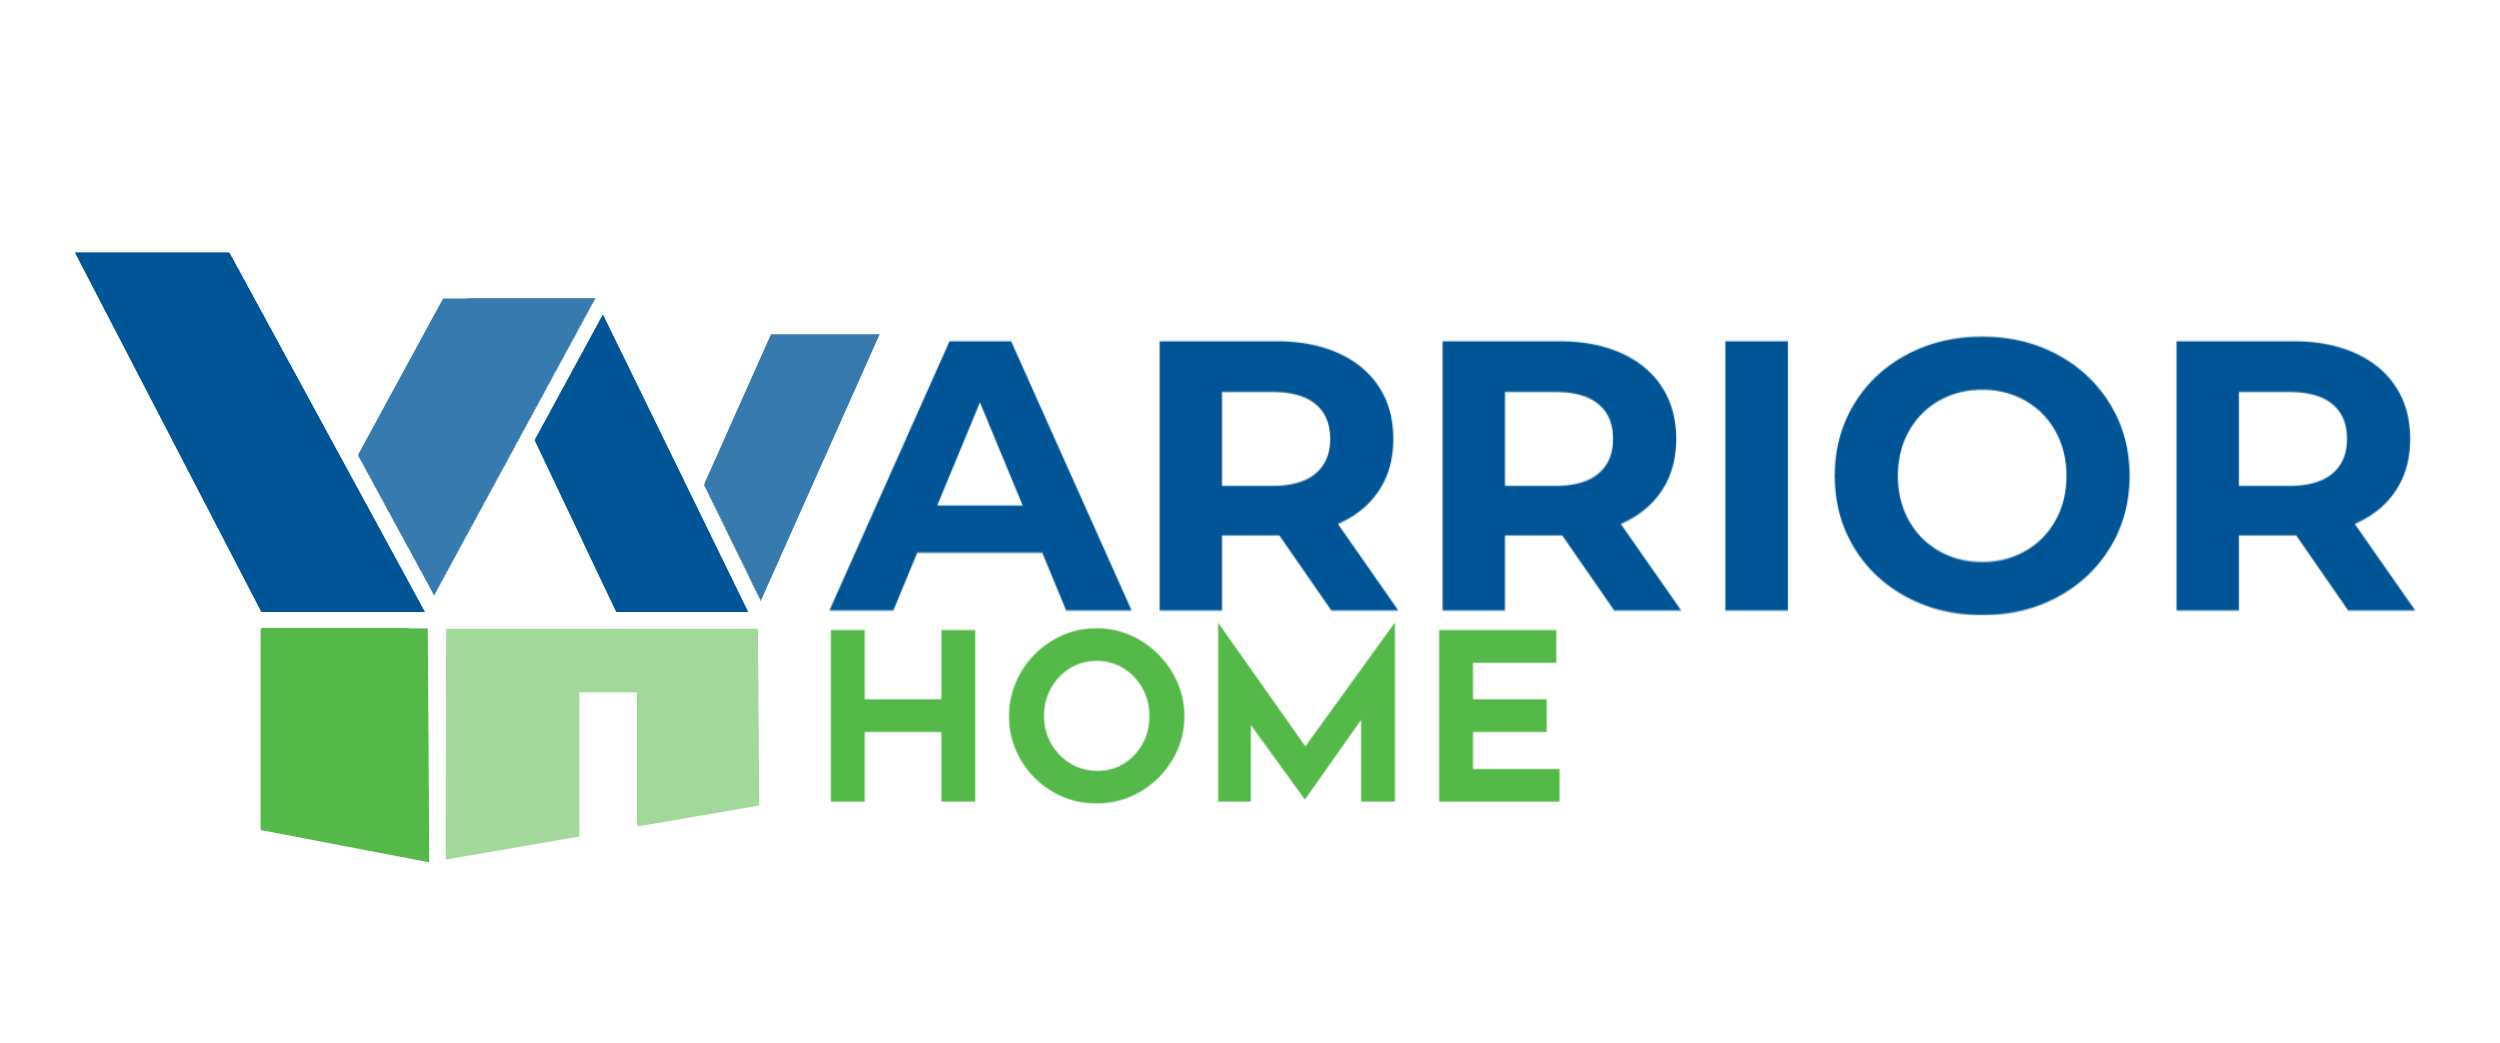 warrior home logo